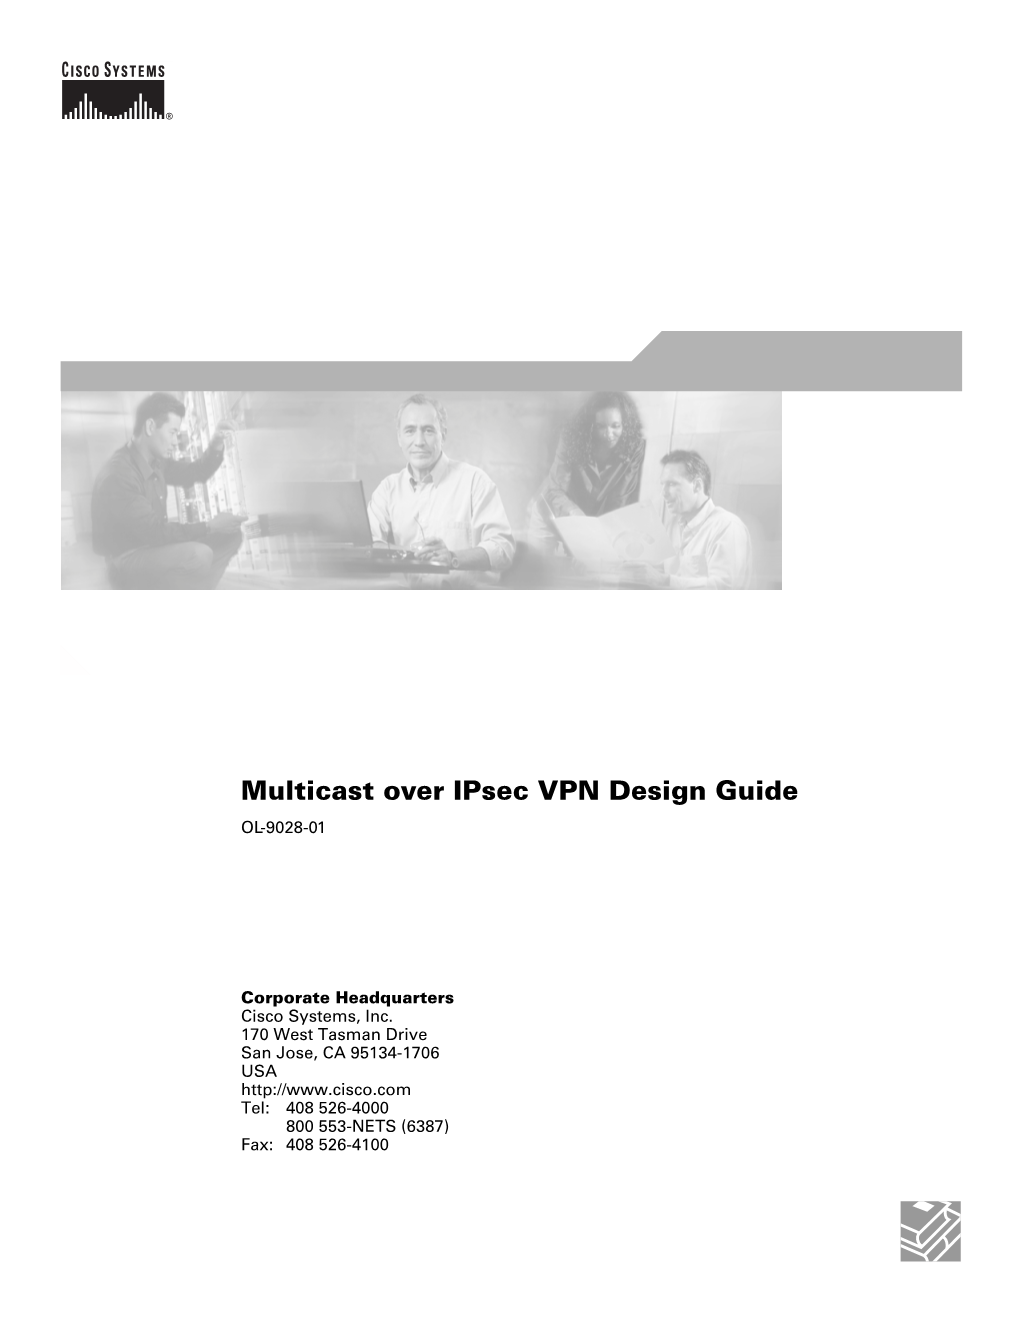 Multicast Over Ipsec VPN Design Guide OL-9028-01